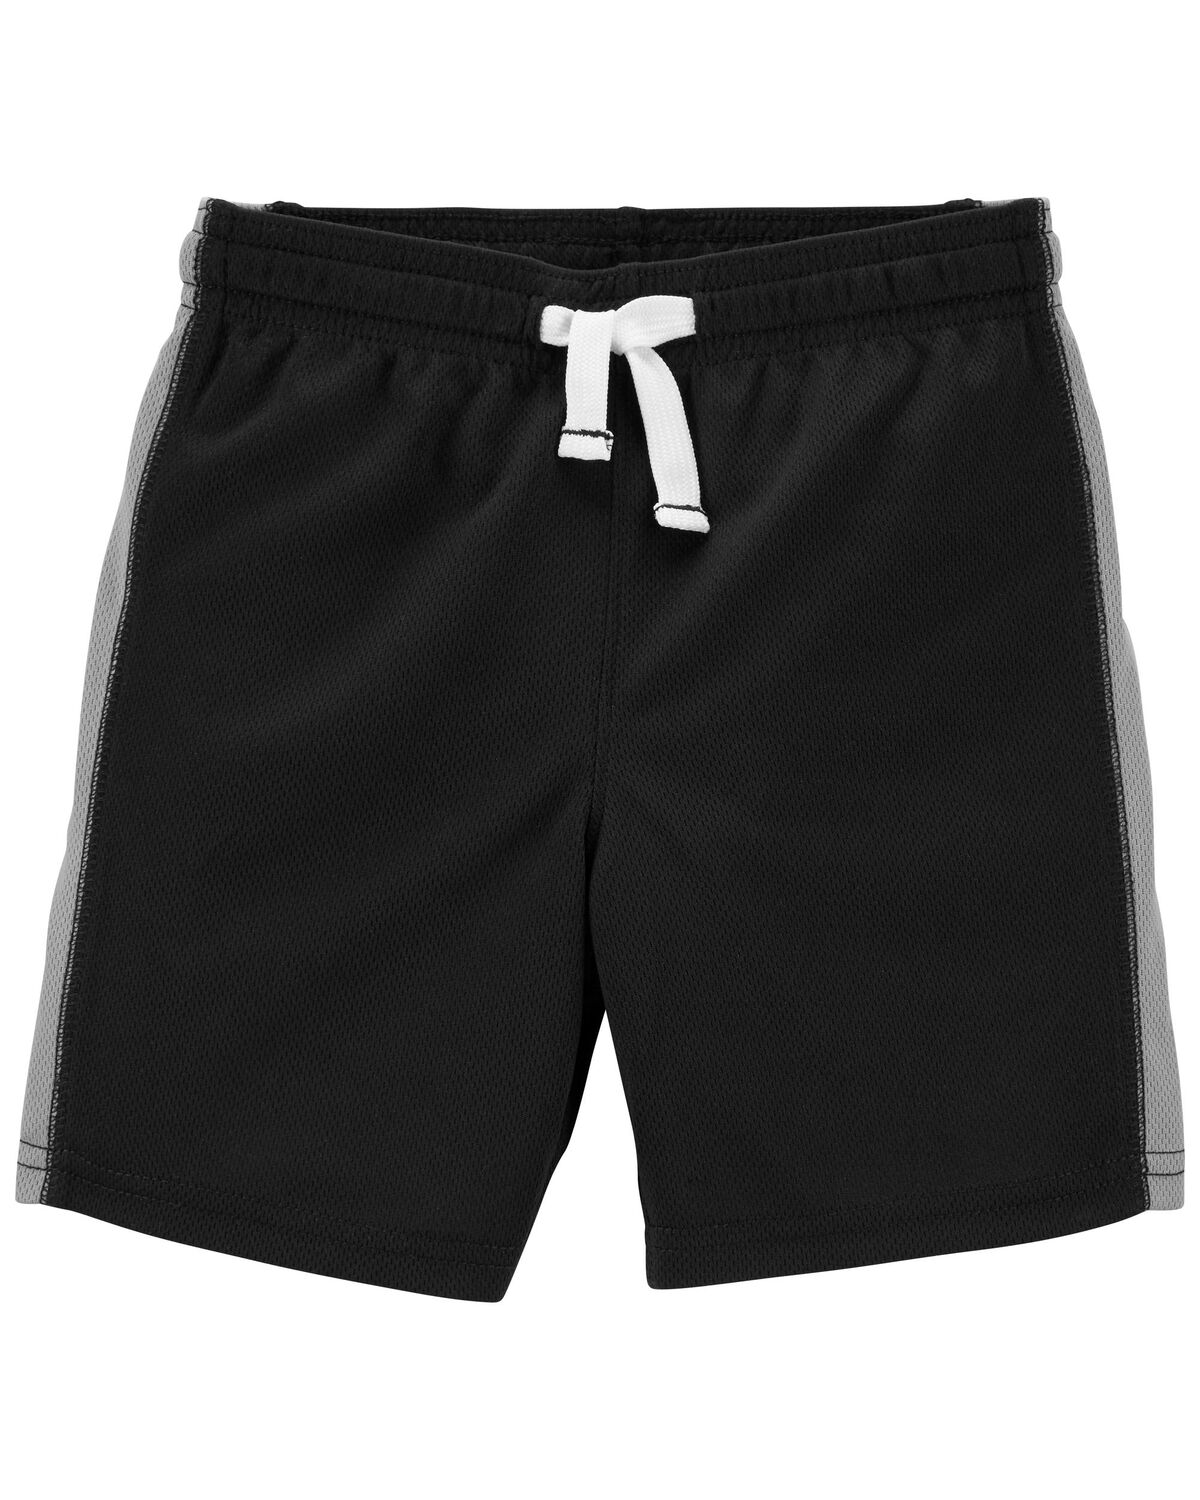 Black Toddler Active Mesh Shorts | carters.com